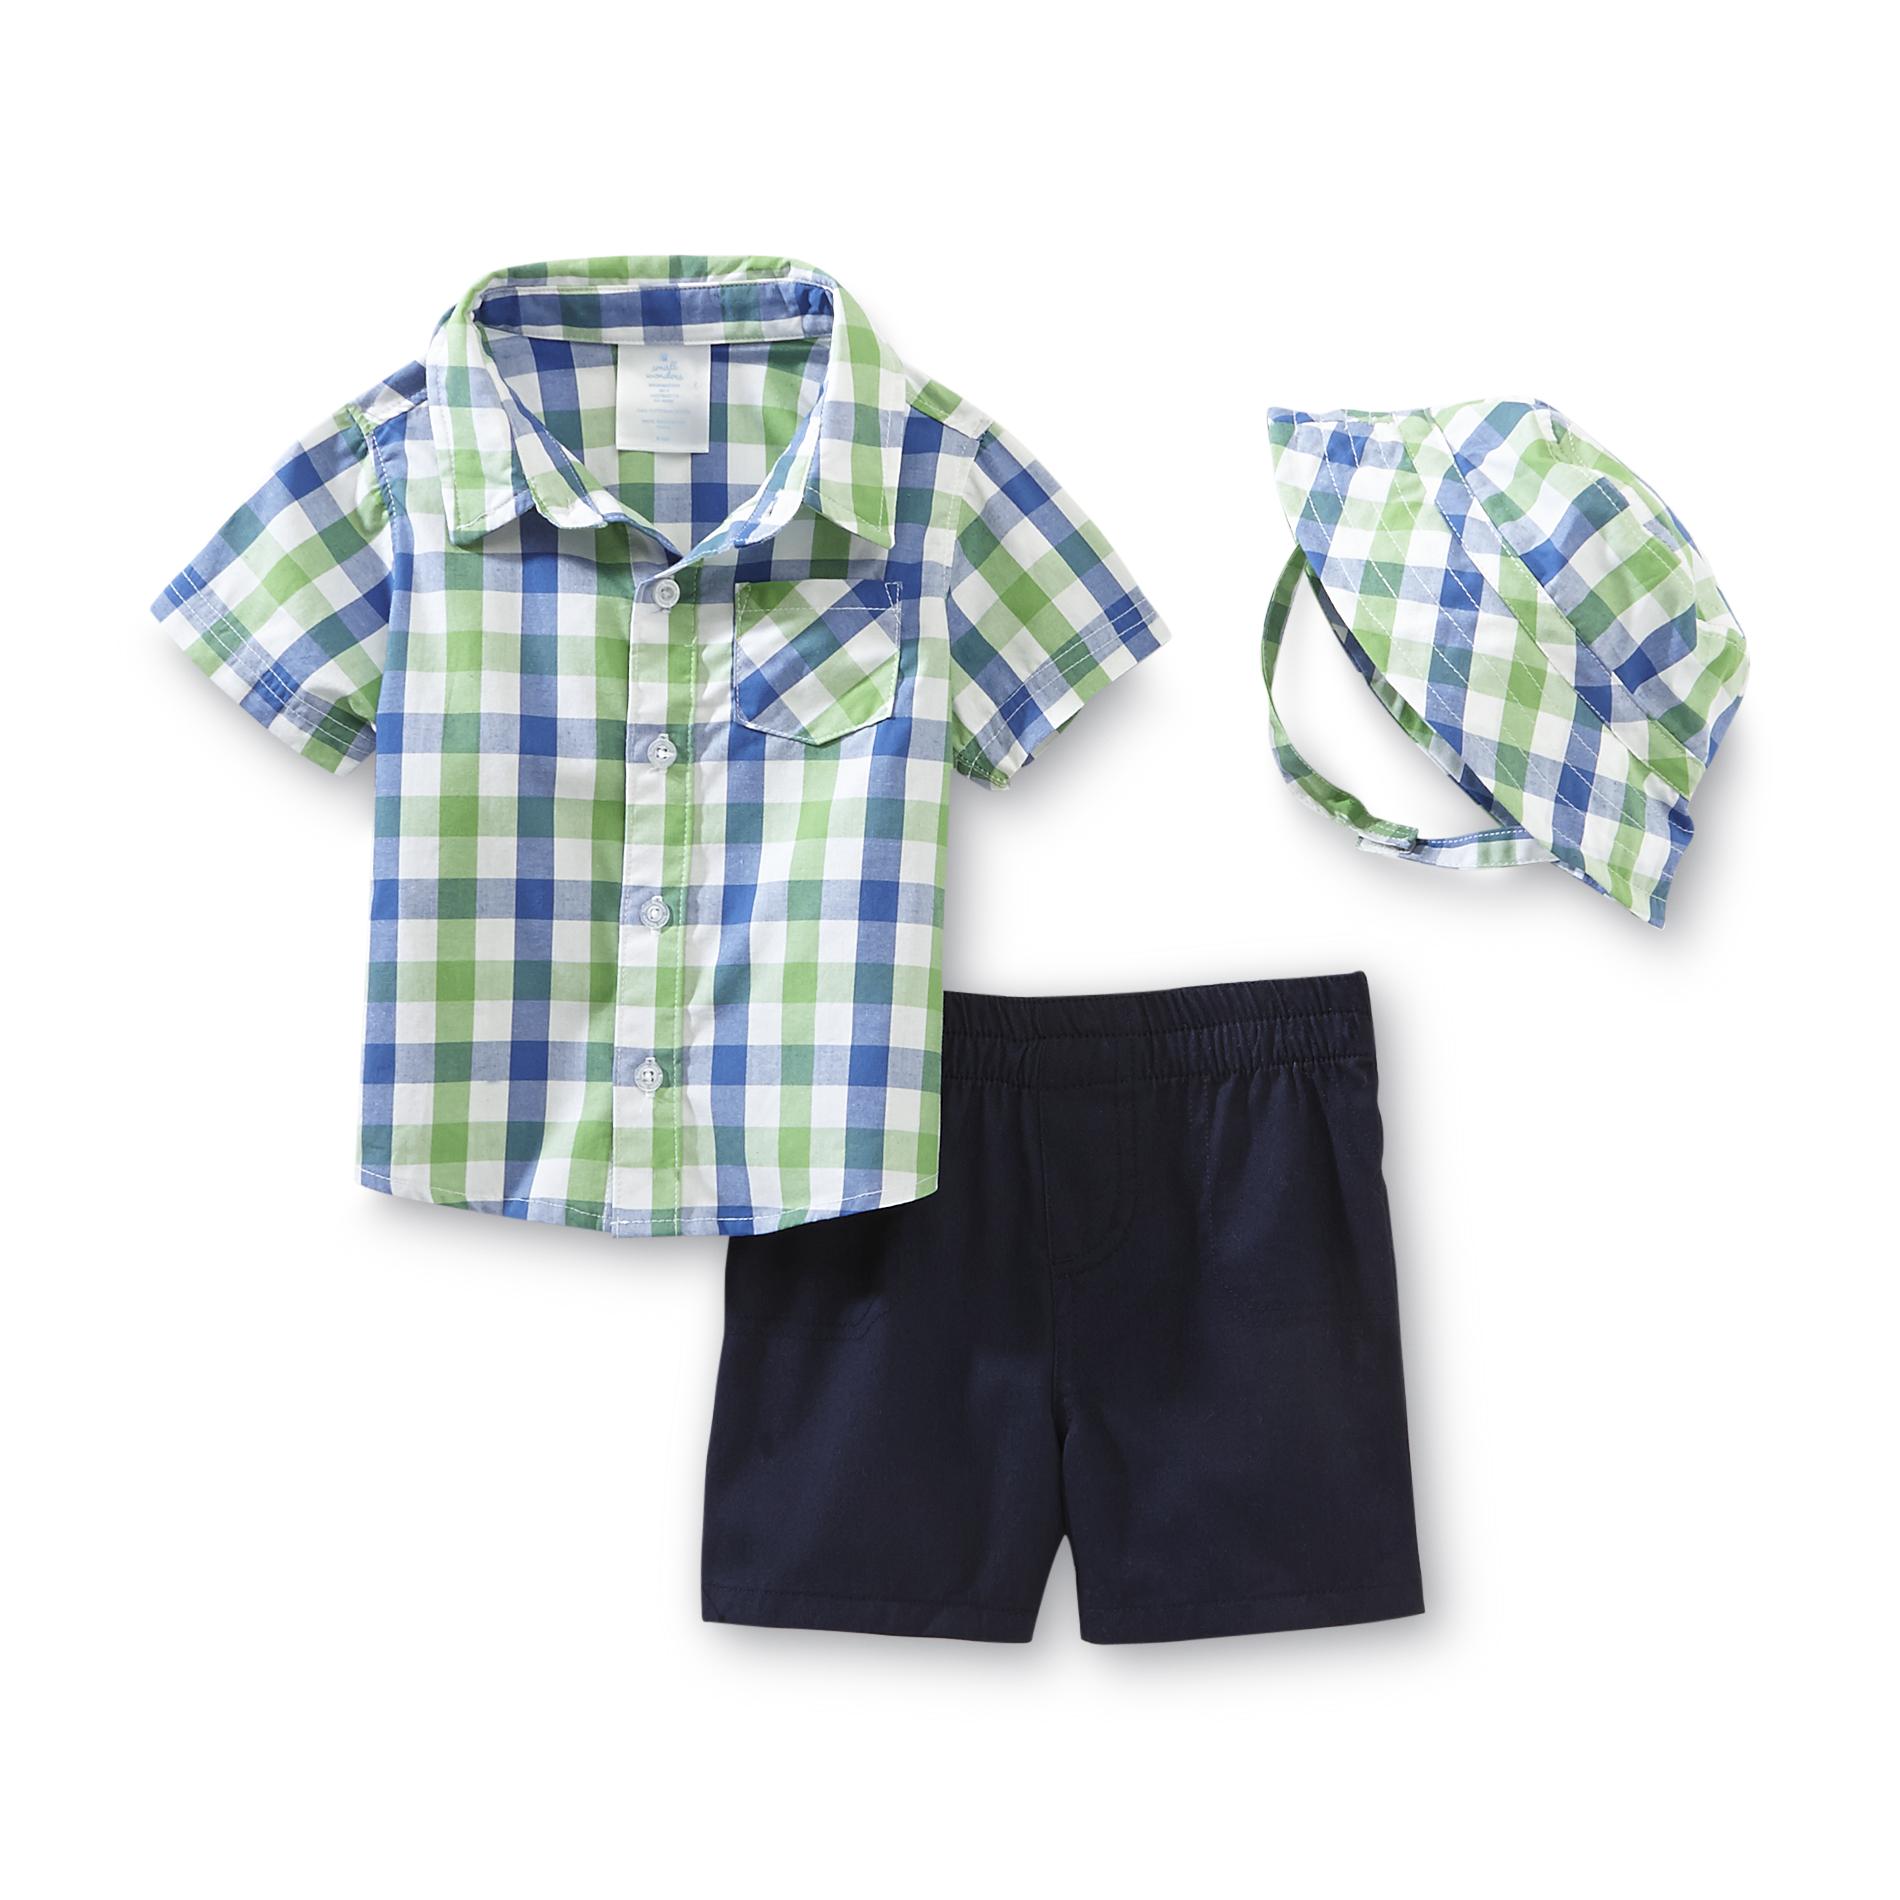 Small Wonders Newborn Boy's Shirt  Shorts & Sun Hat - Plaid